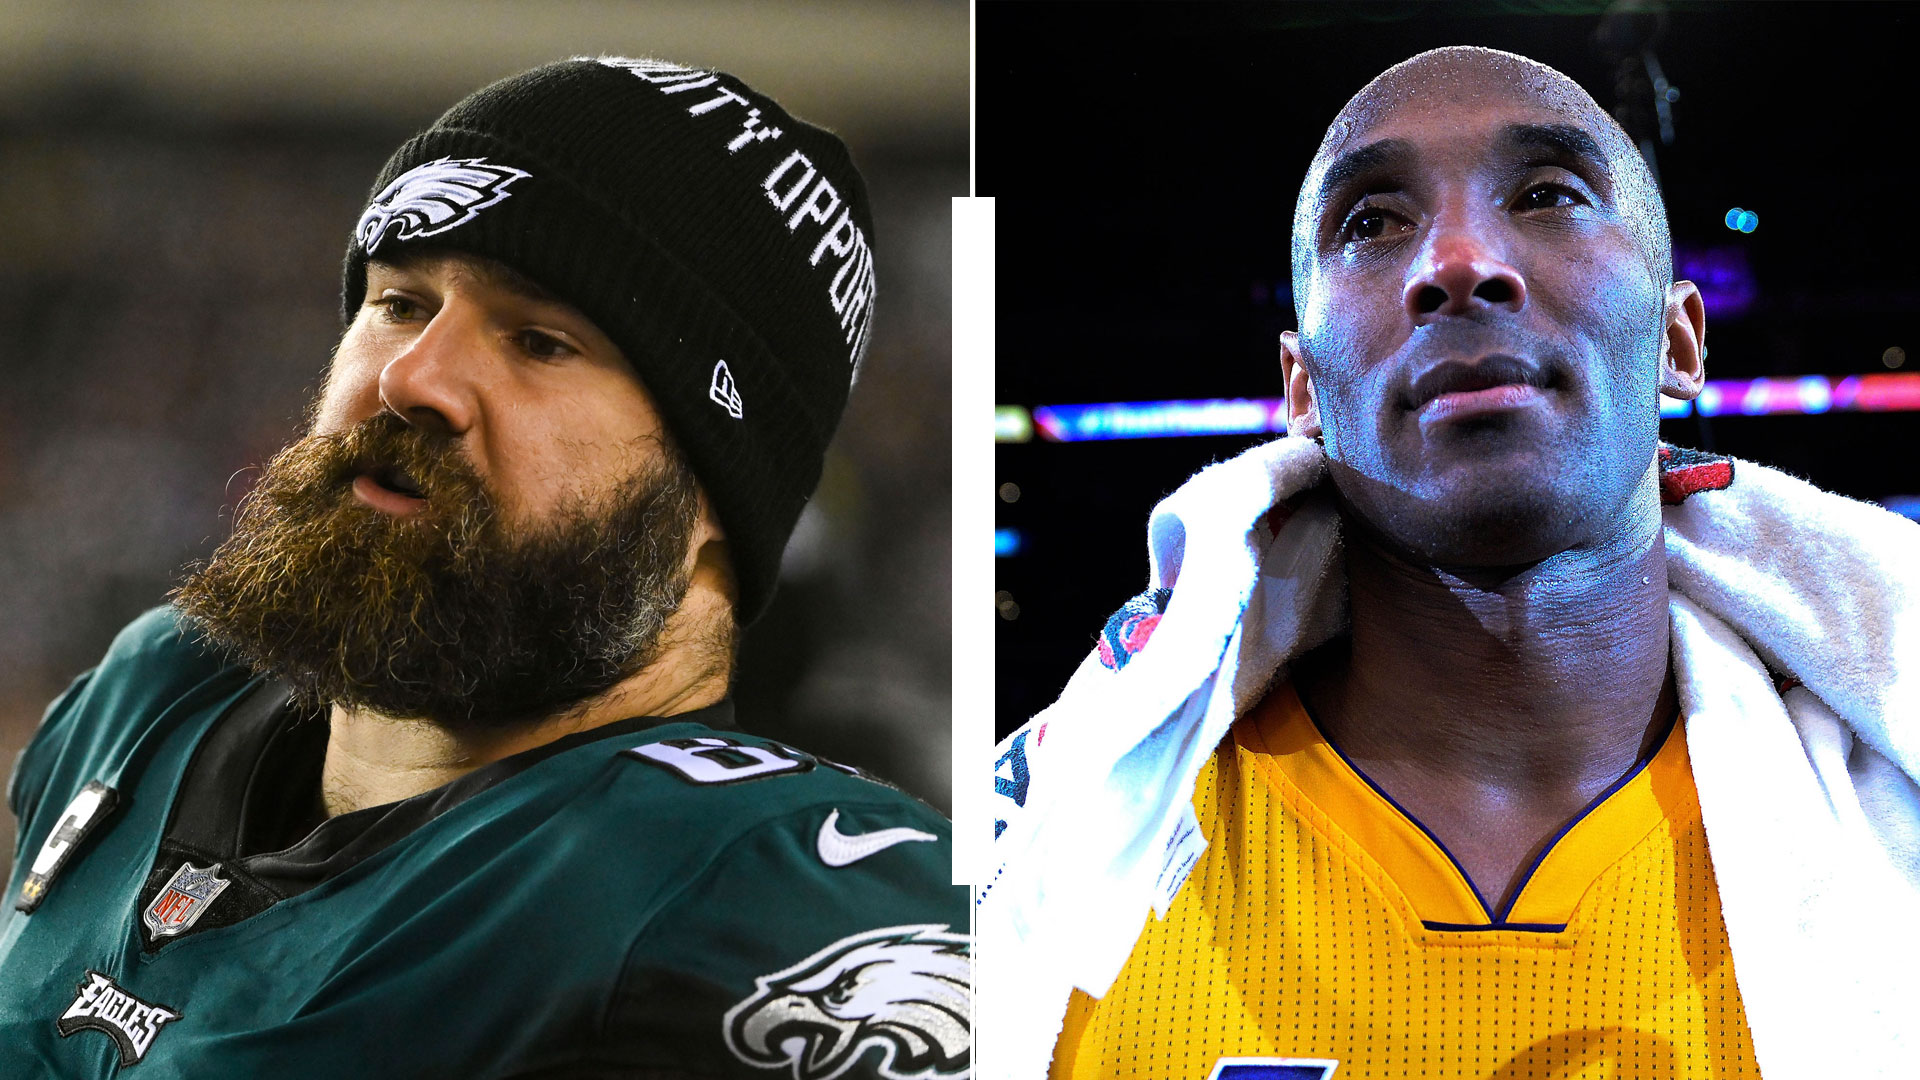 Eagles' Nick Sirianni pushing message from Jason Kelce and Kobe Bryant –  NBC Sports Philadelphia